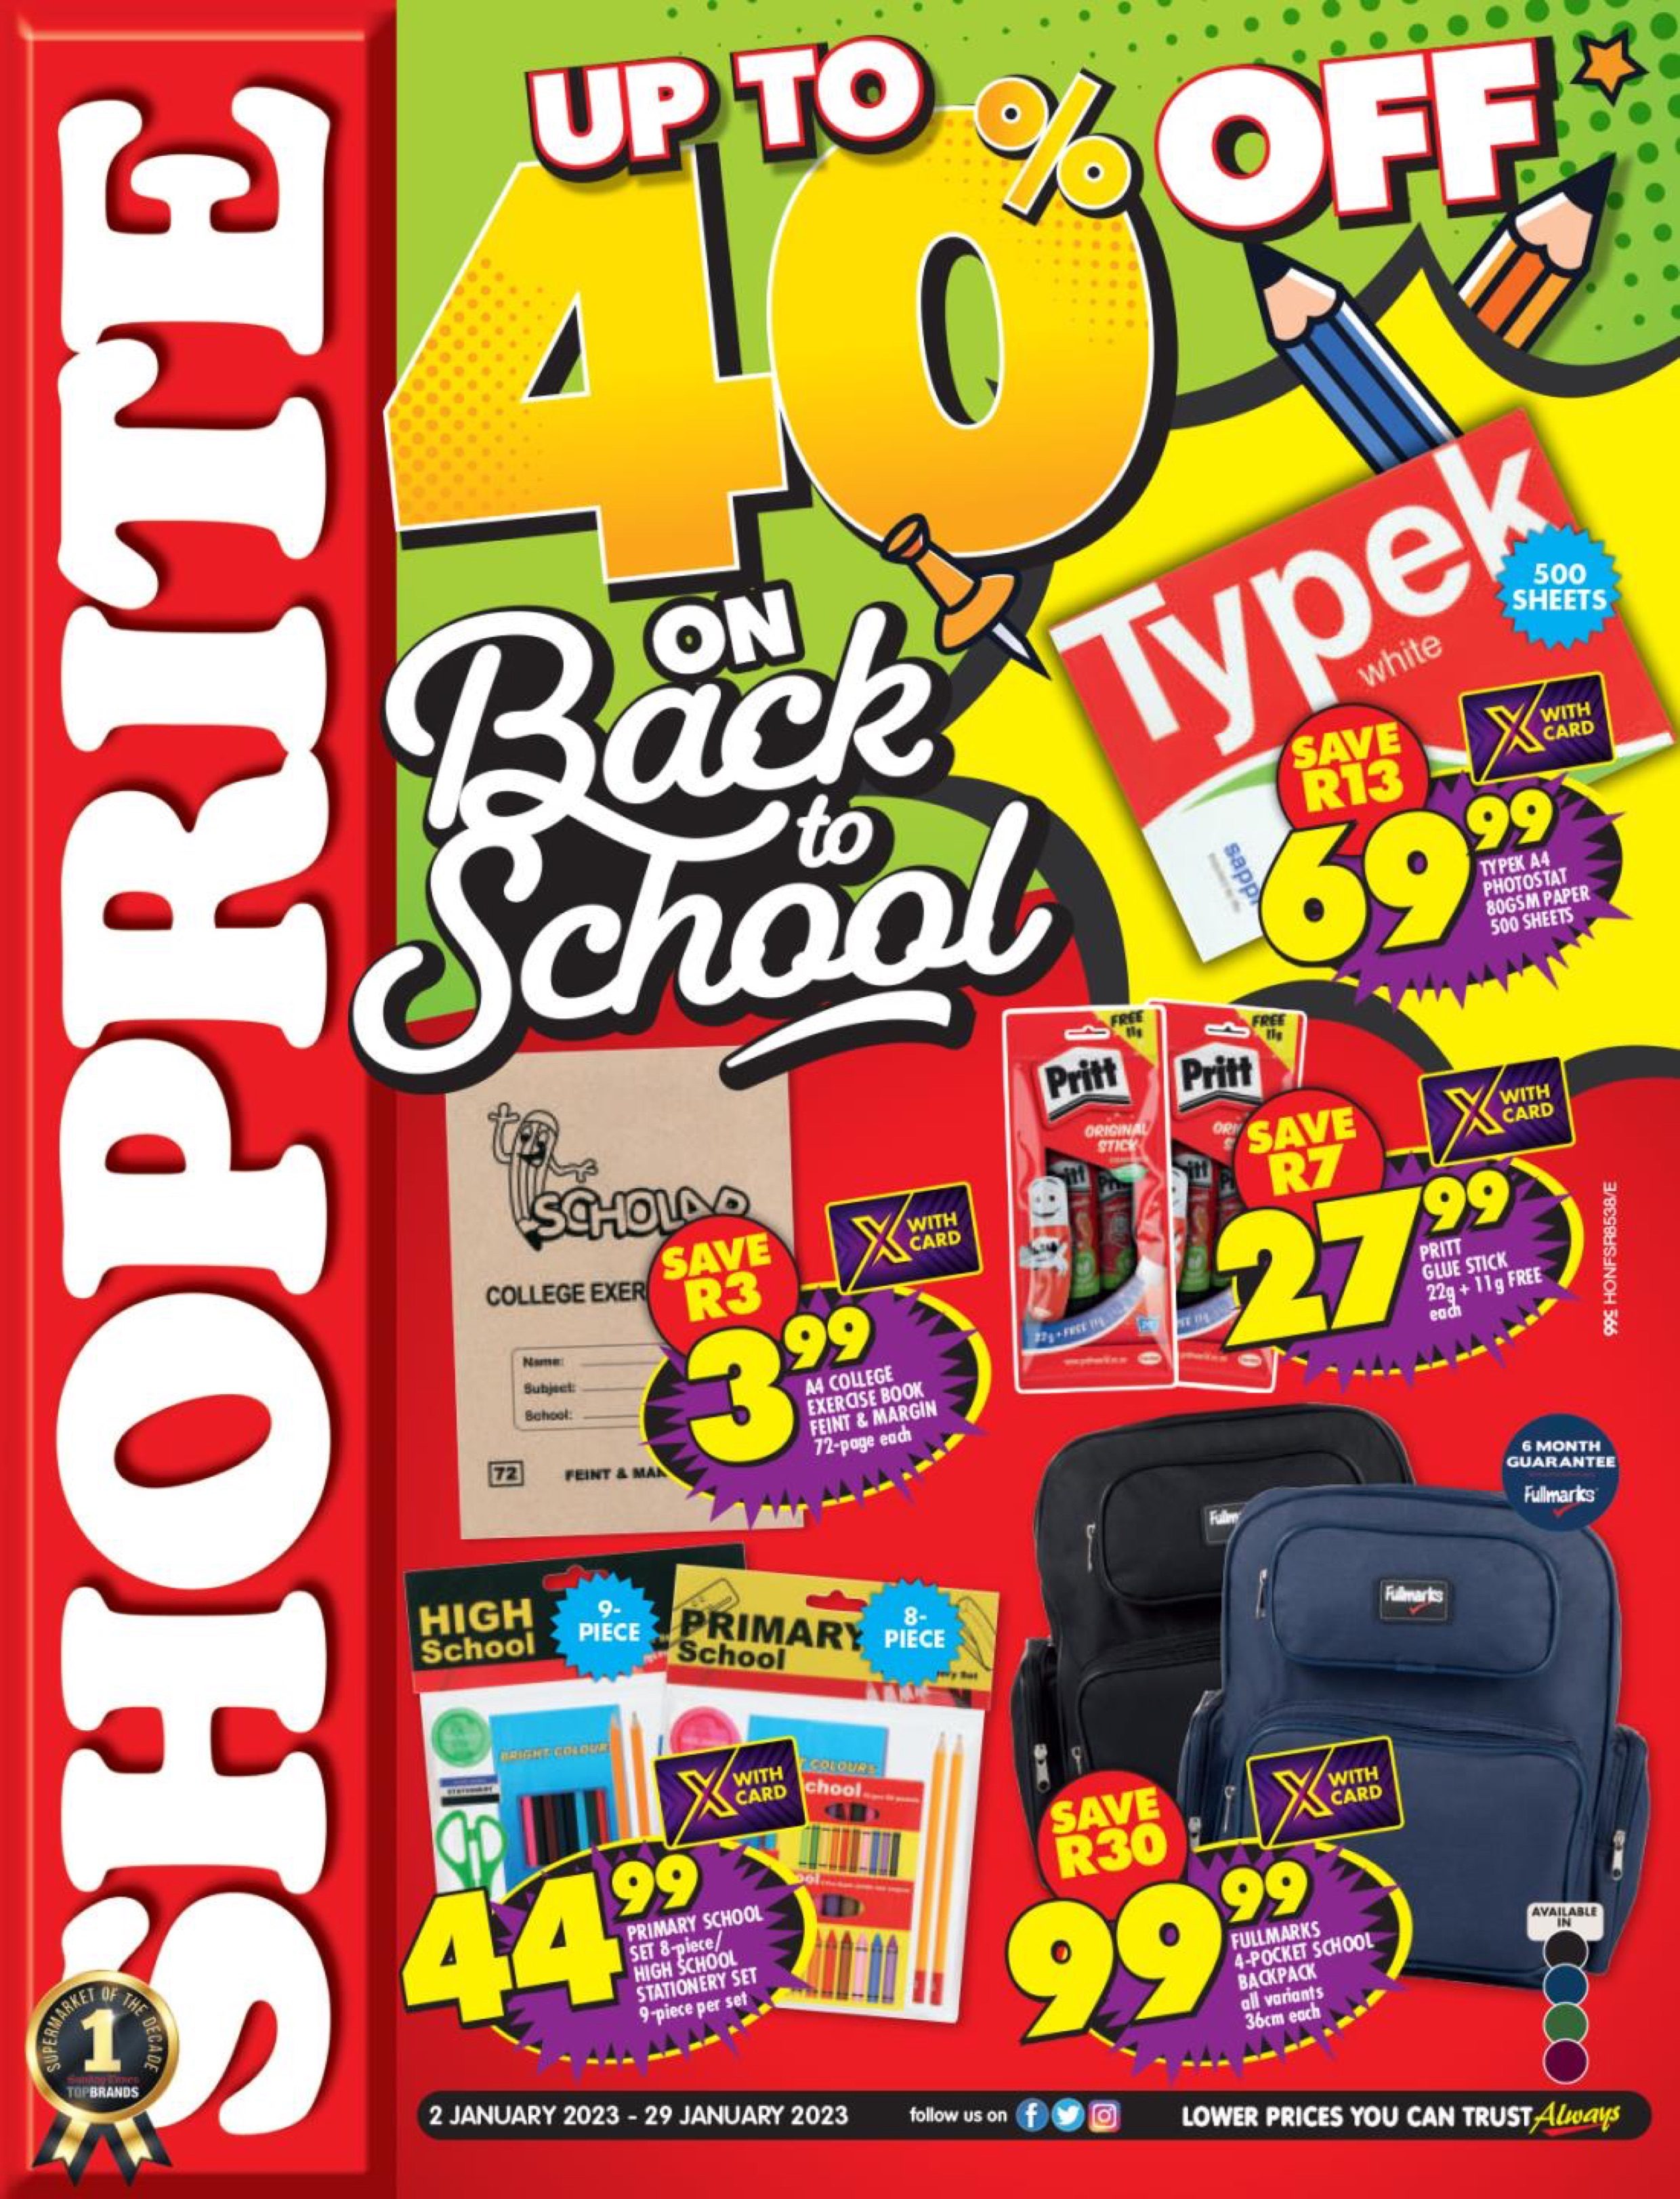 Shoprite Specials Back to School 2023 Shoprite Catalogue 2023